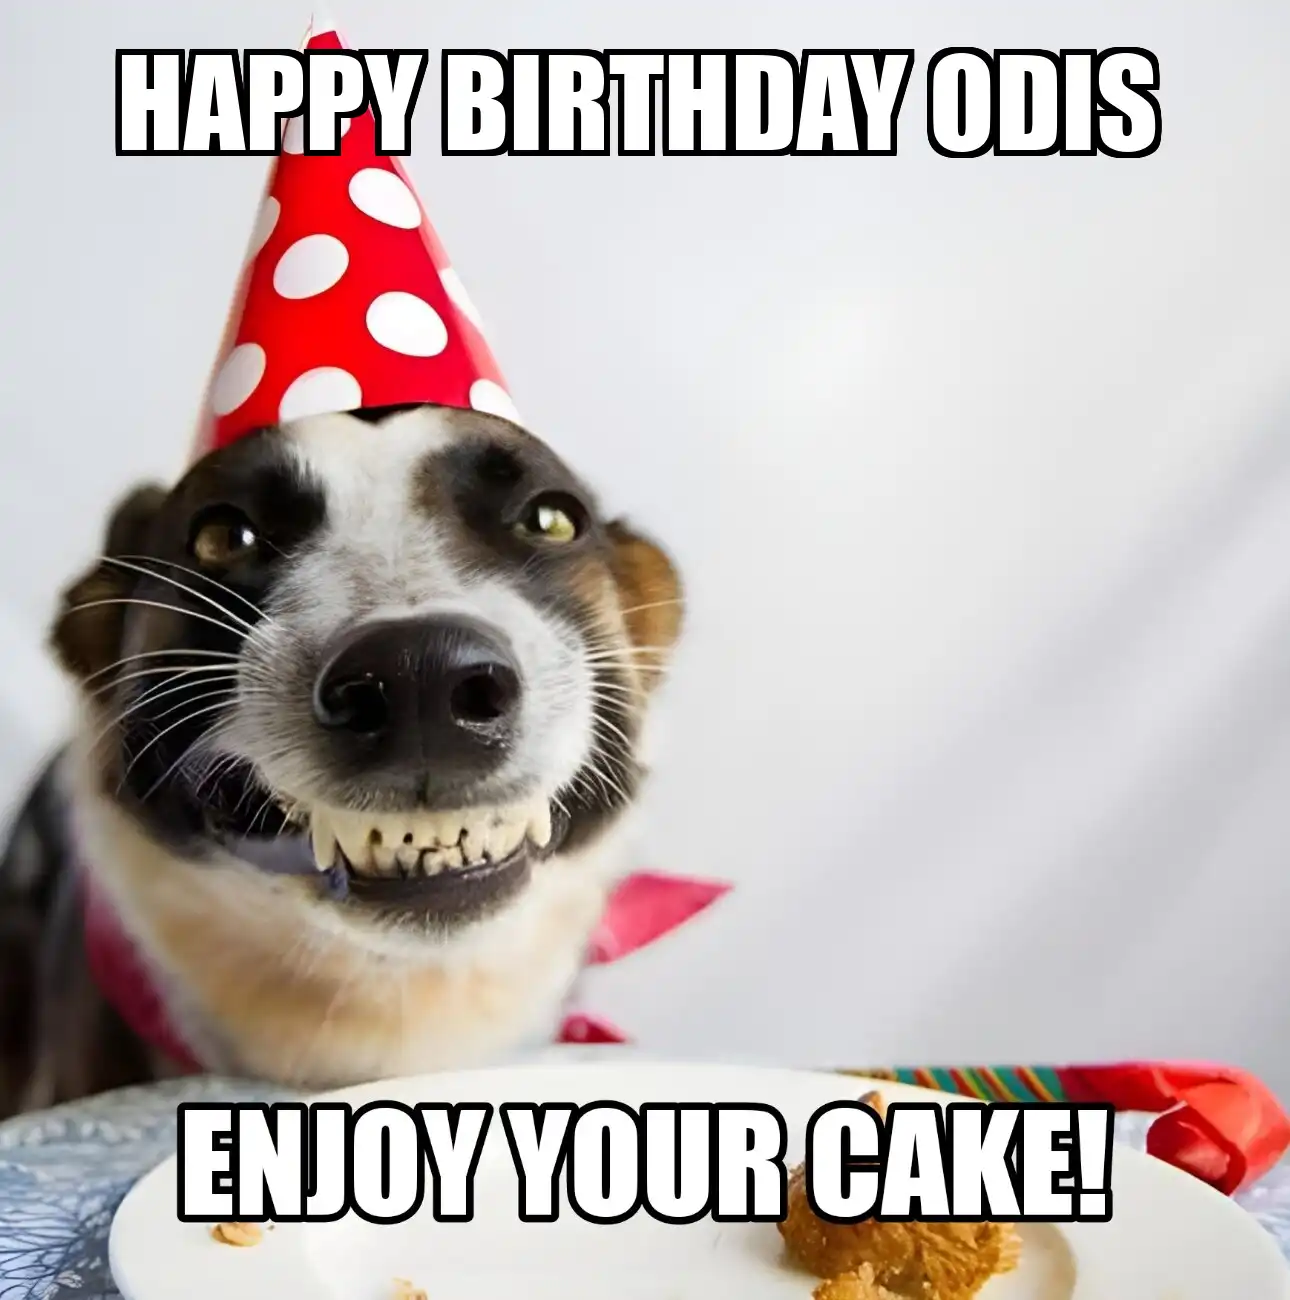 Happy Birthday Odis Enjoy Your Cake Dog Meme